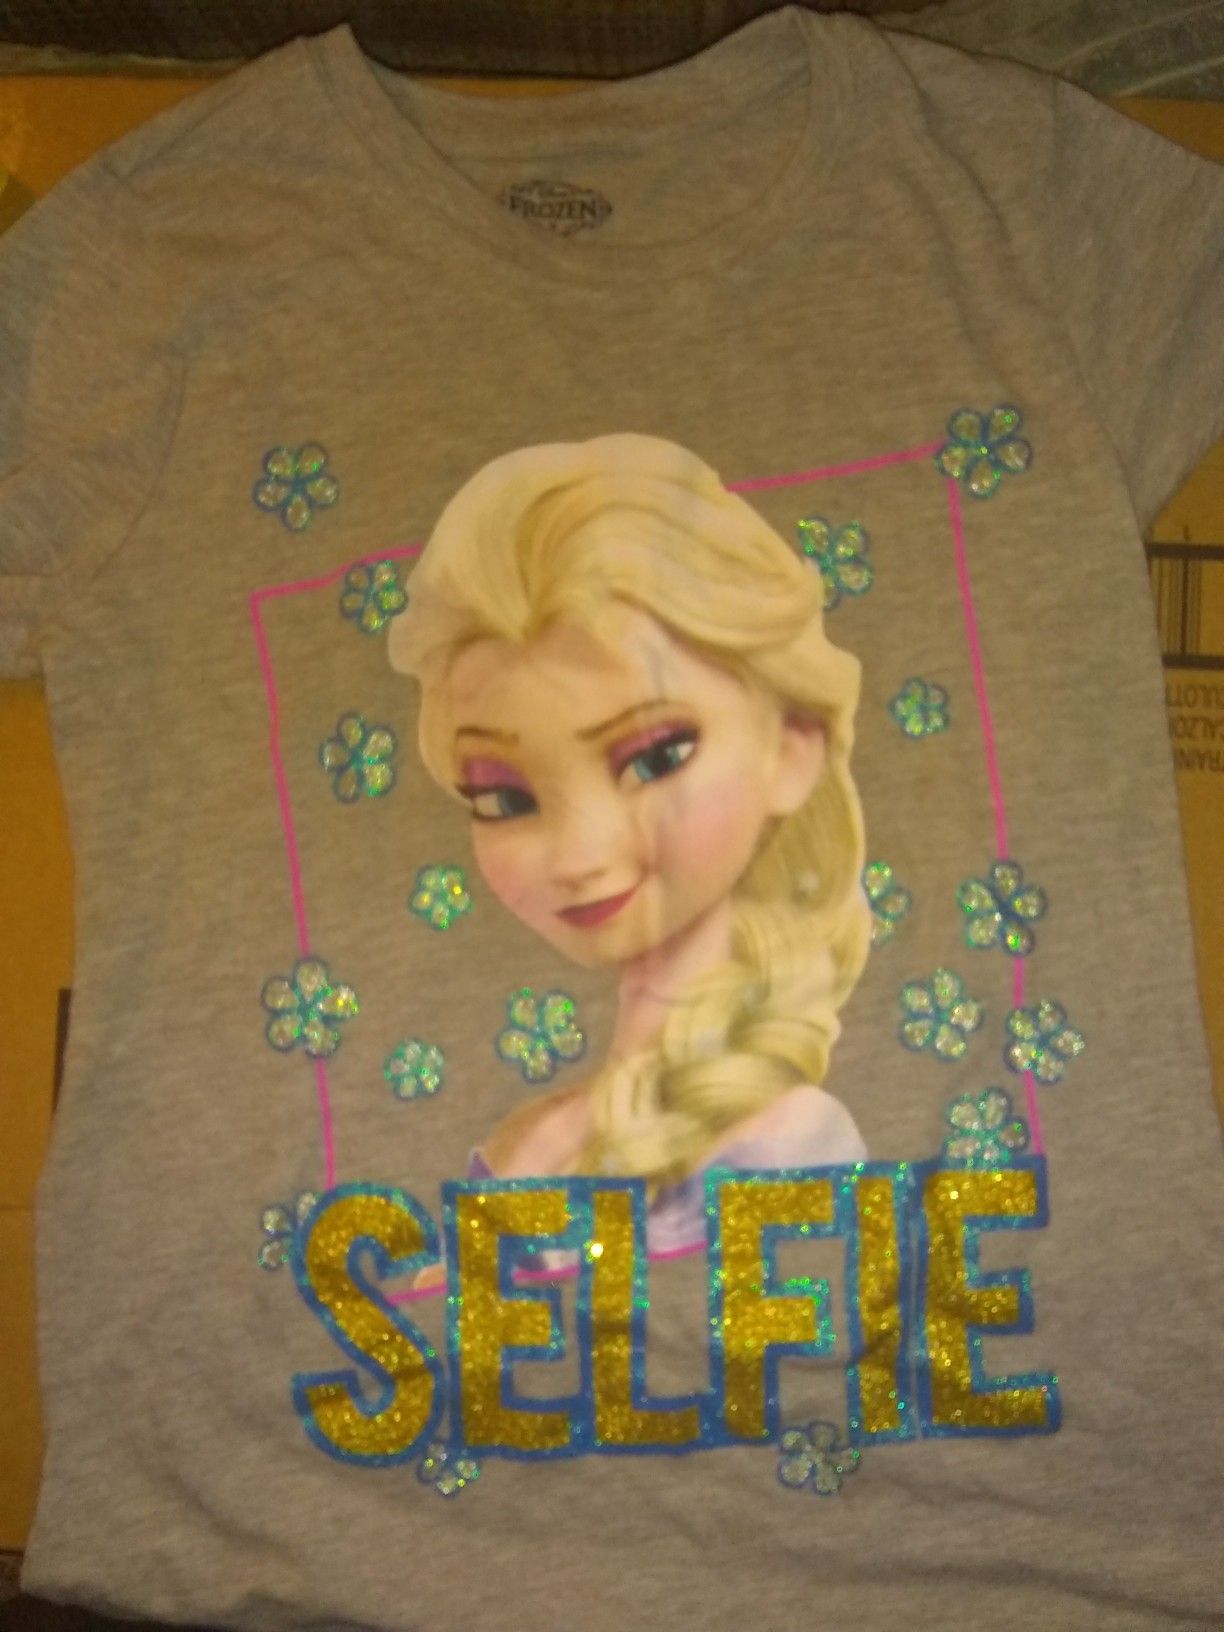 Disney's Frozen Elsa shirt (size 14)